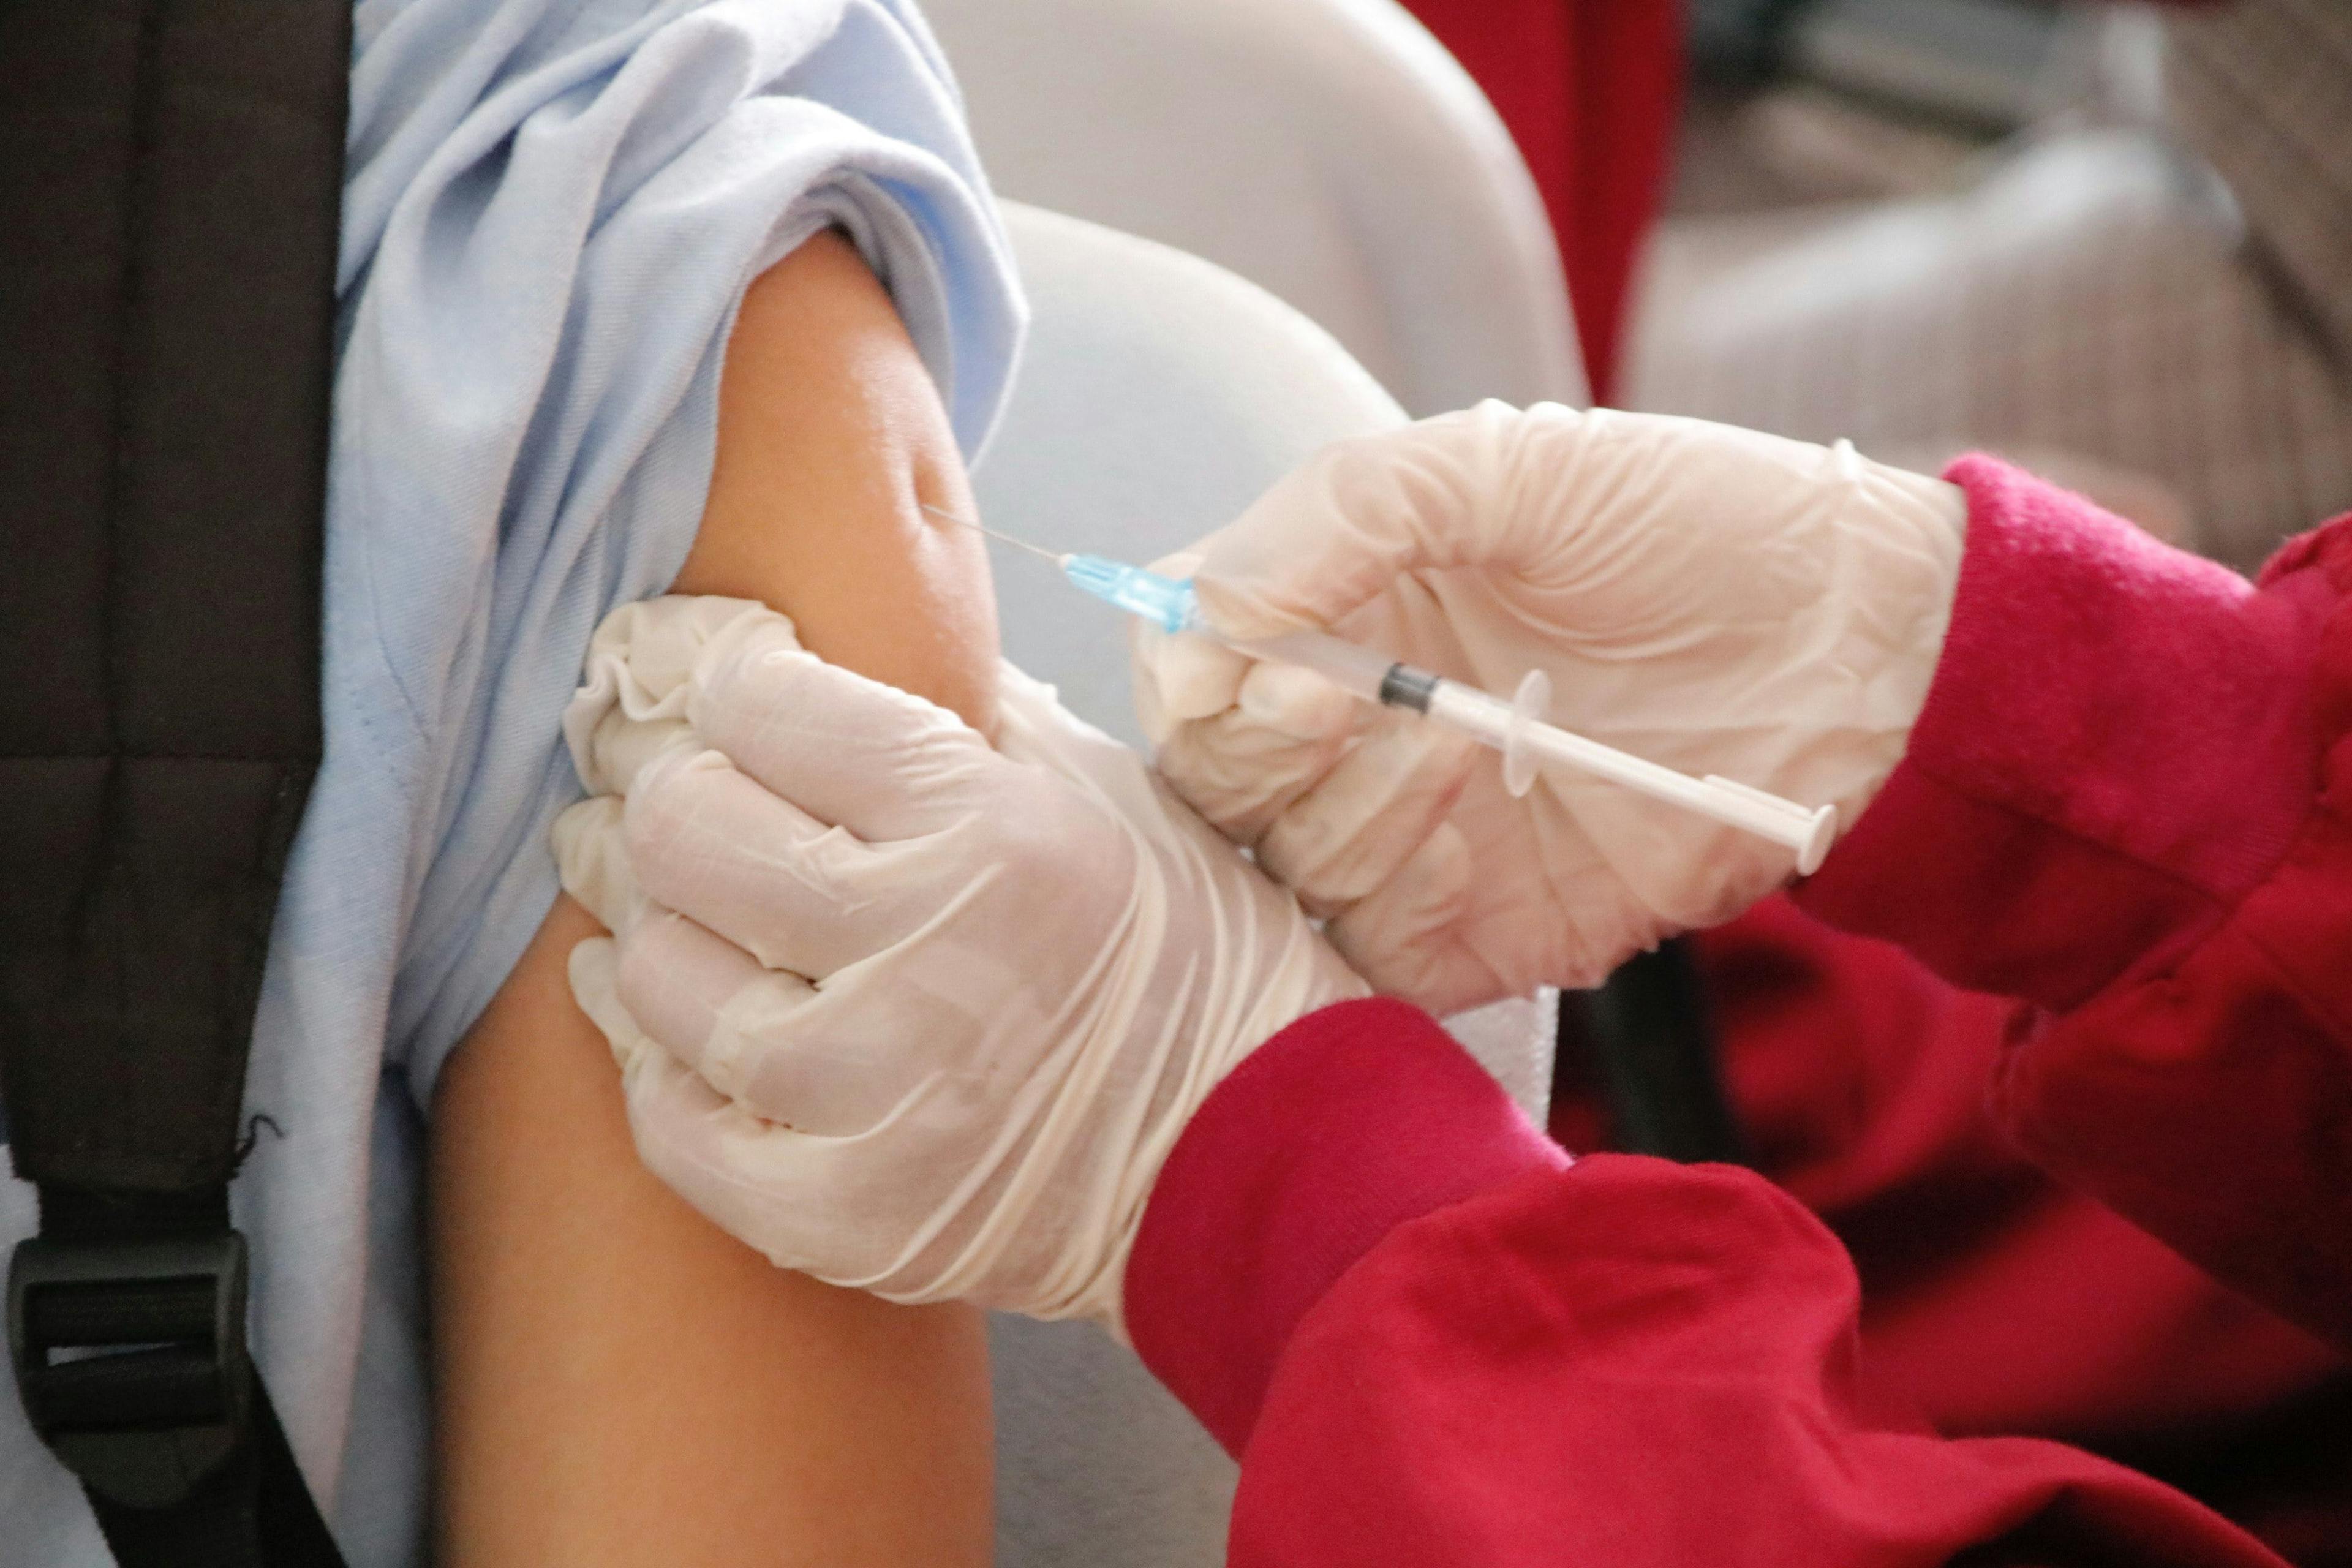 Investigational Vaccine Meets RSV Inoculation Challenge